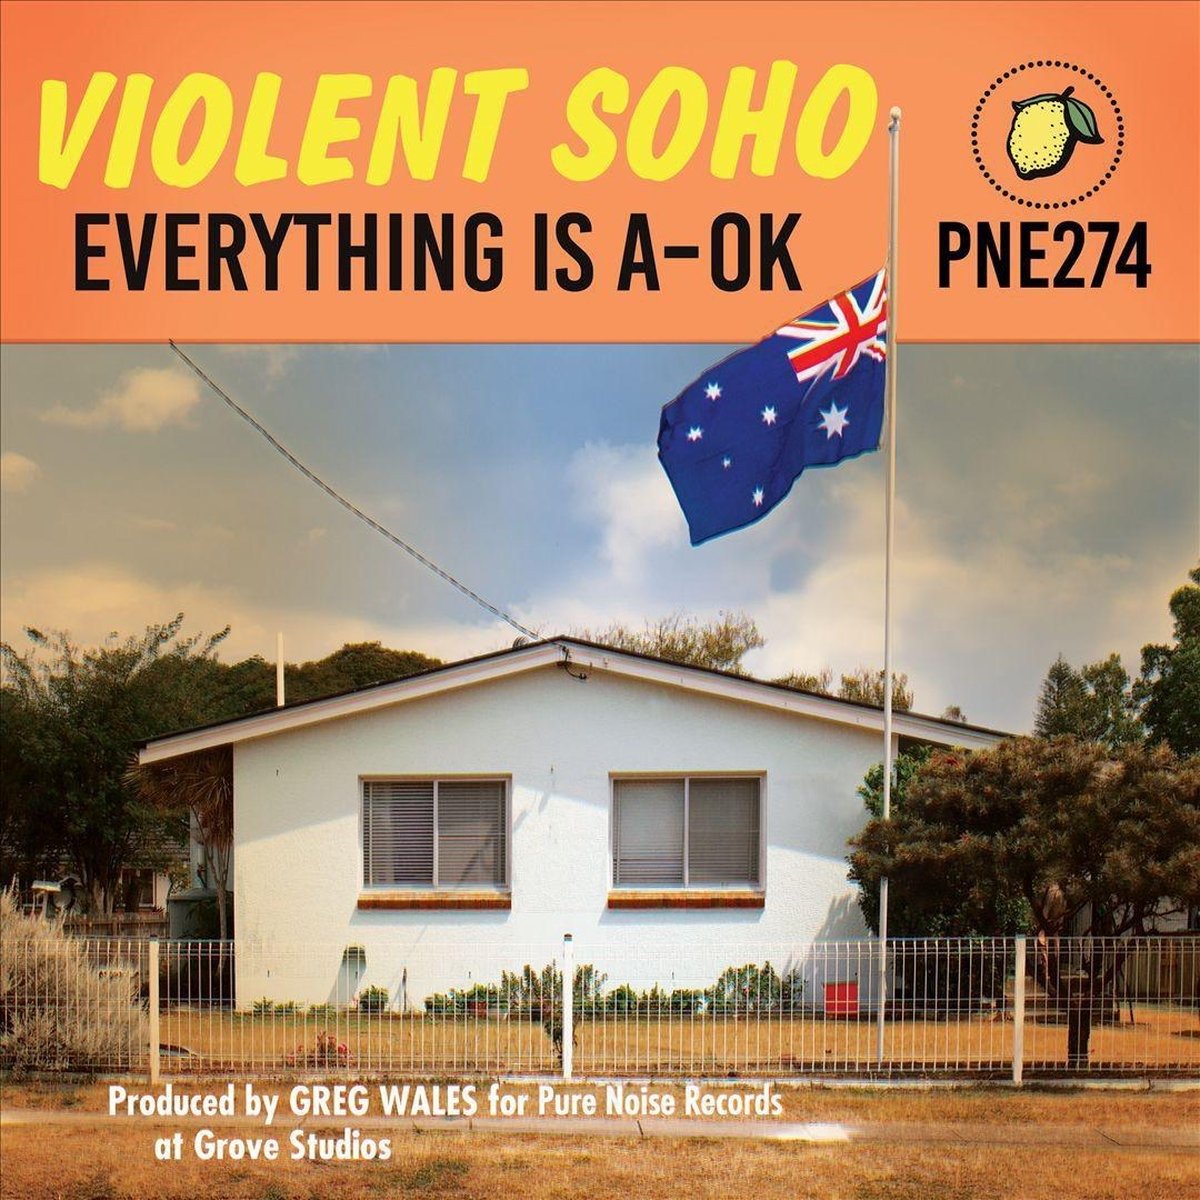 CD Shop - VIOLENT SOHO EVERYTHING IS A-OK